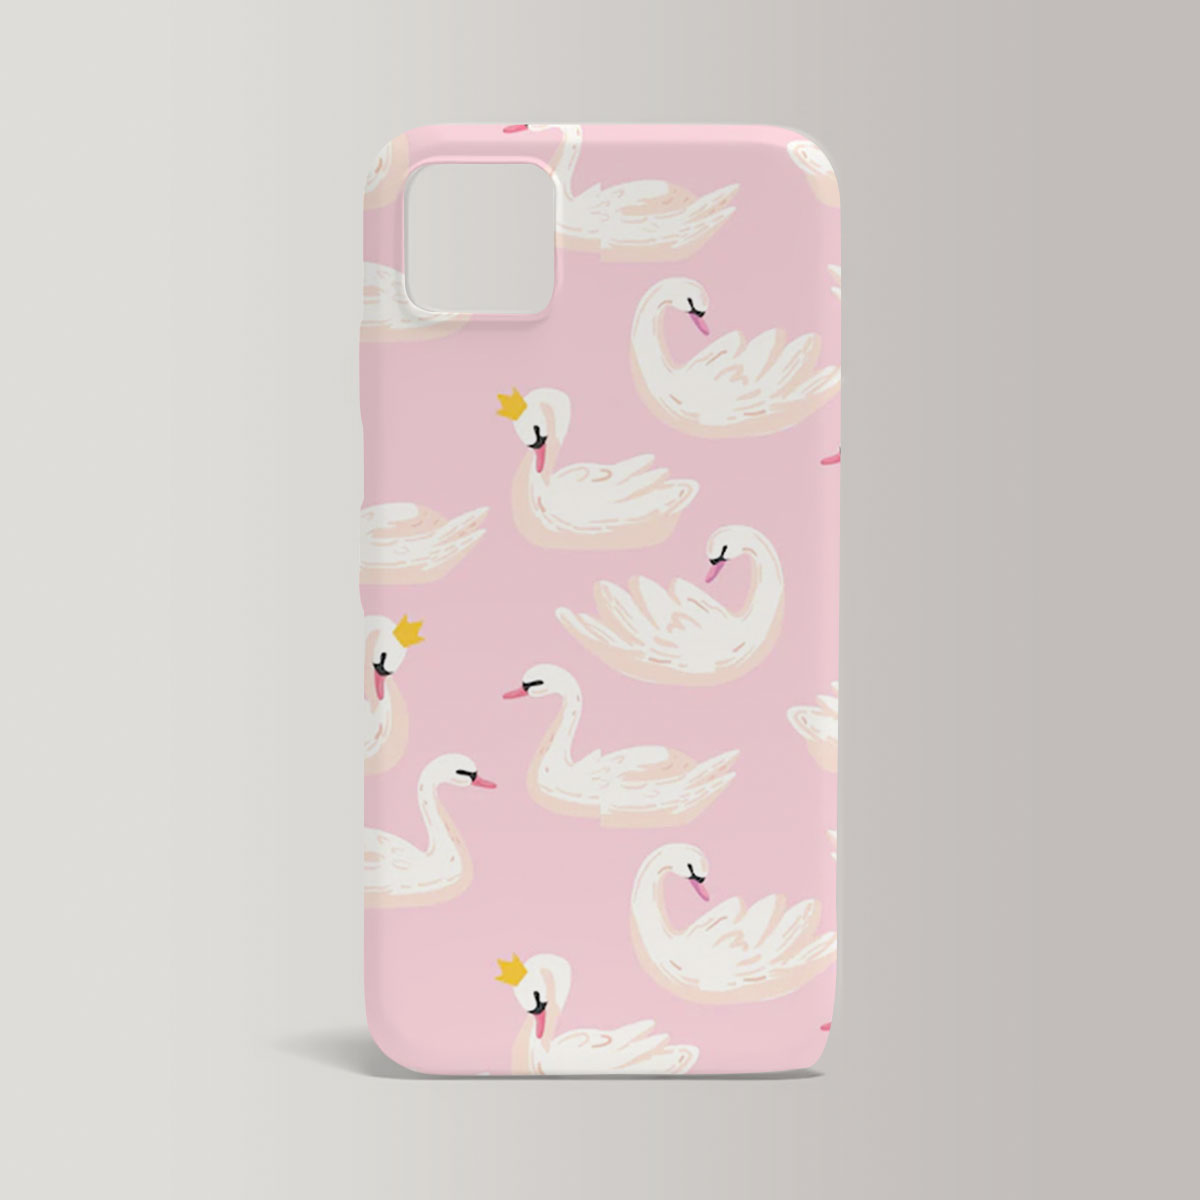 Beautiful Royal Swan Iphone Case